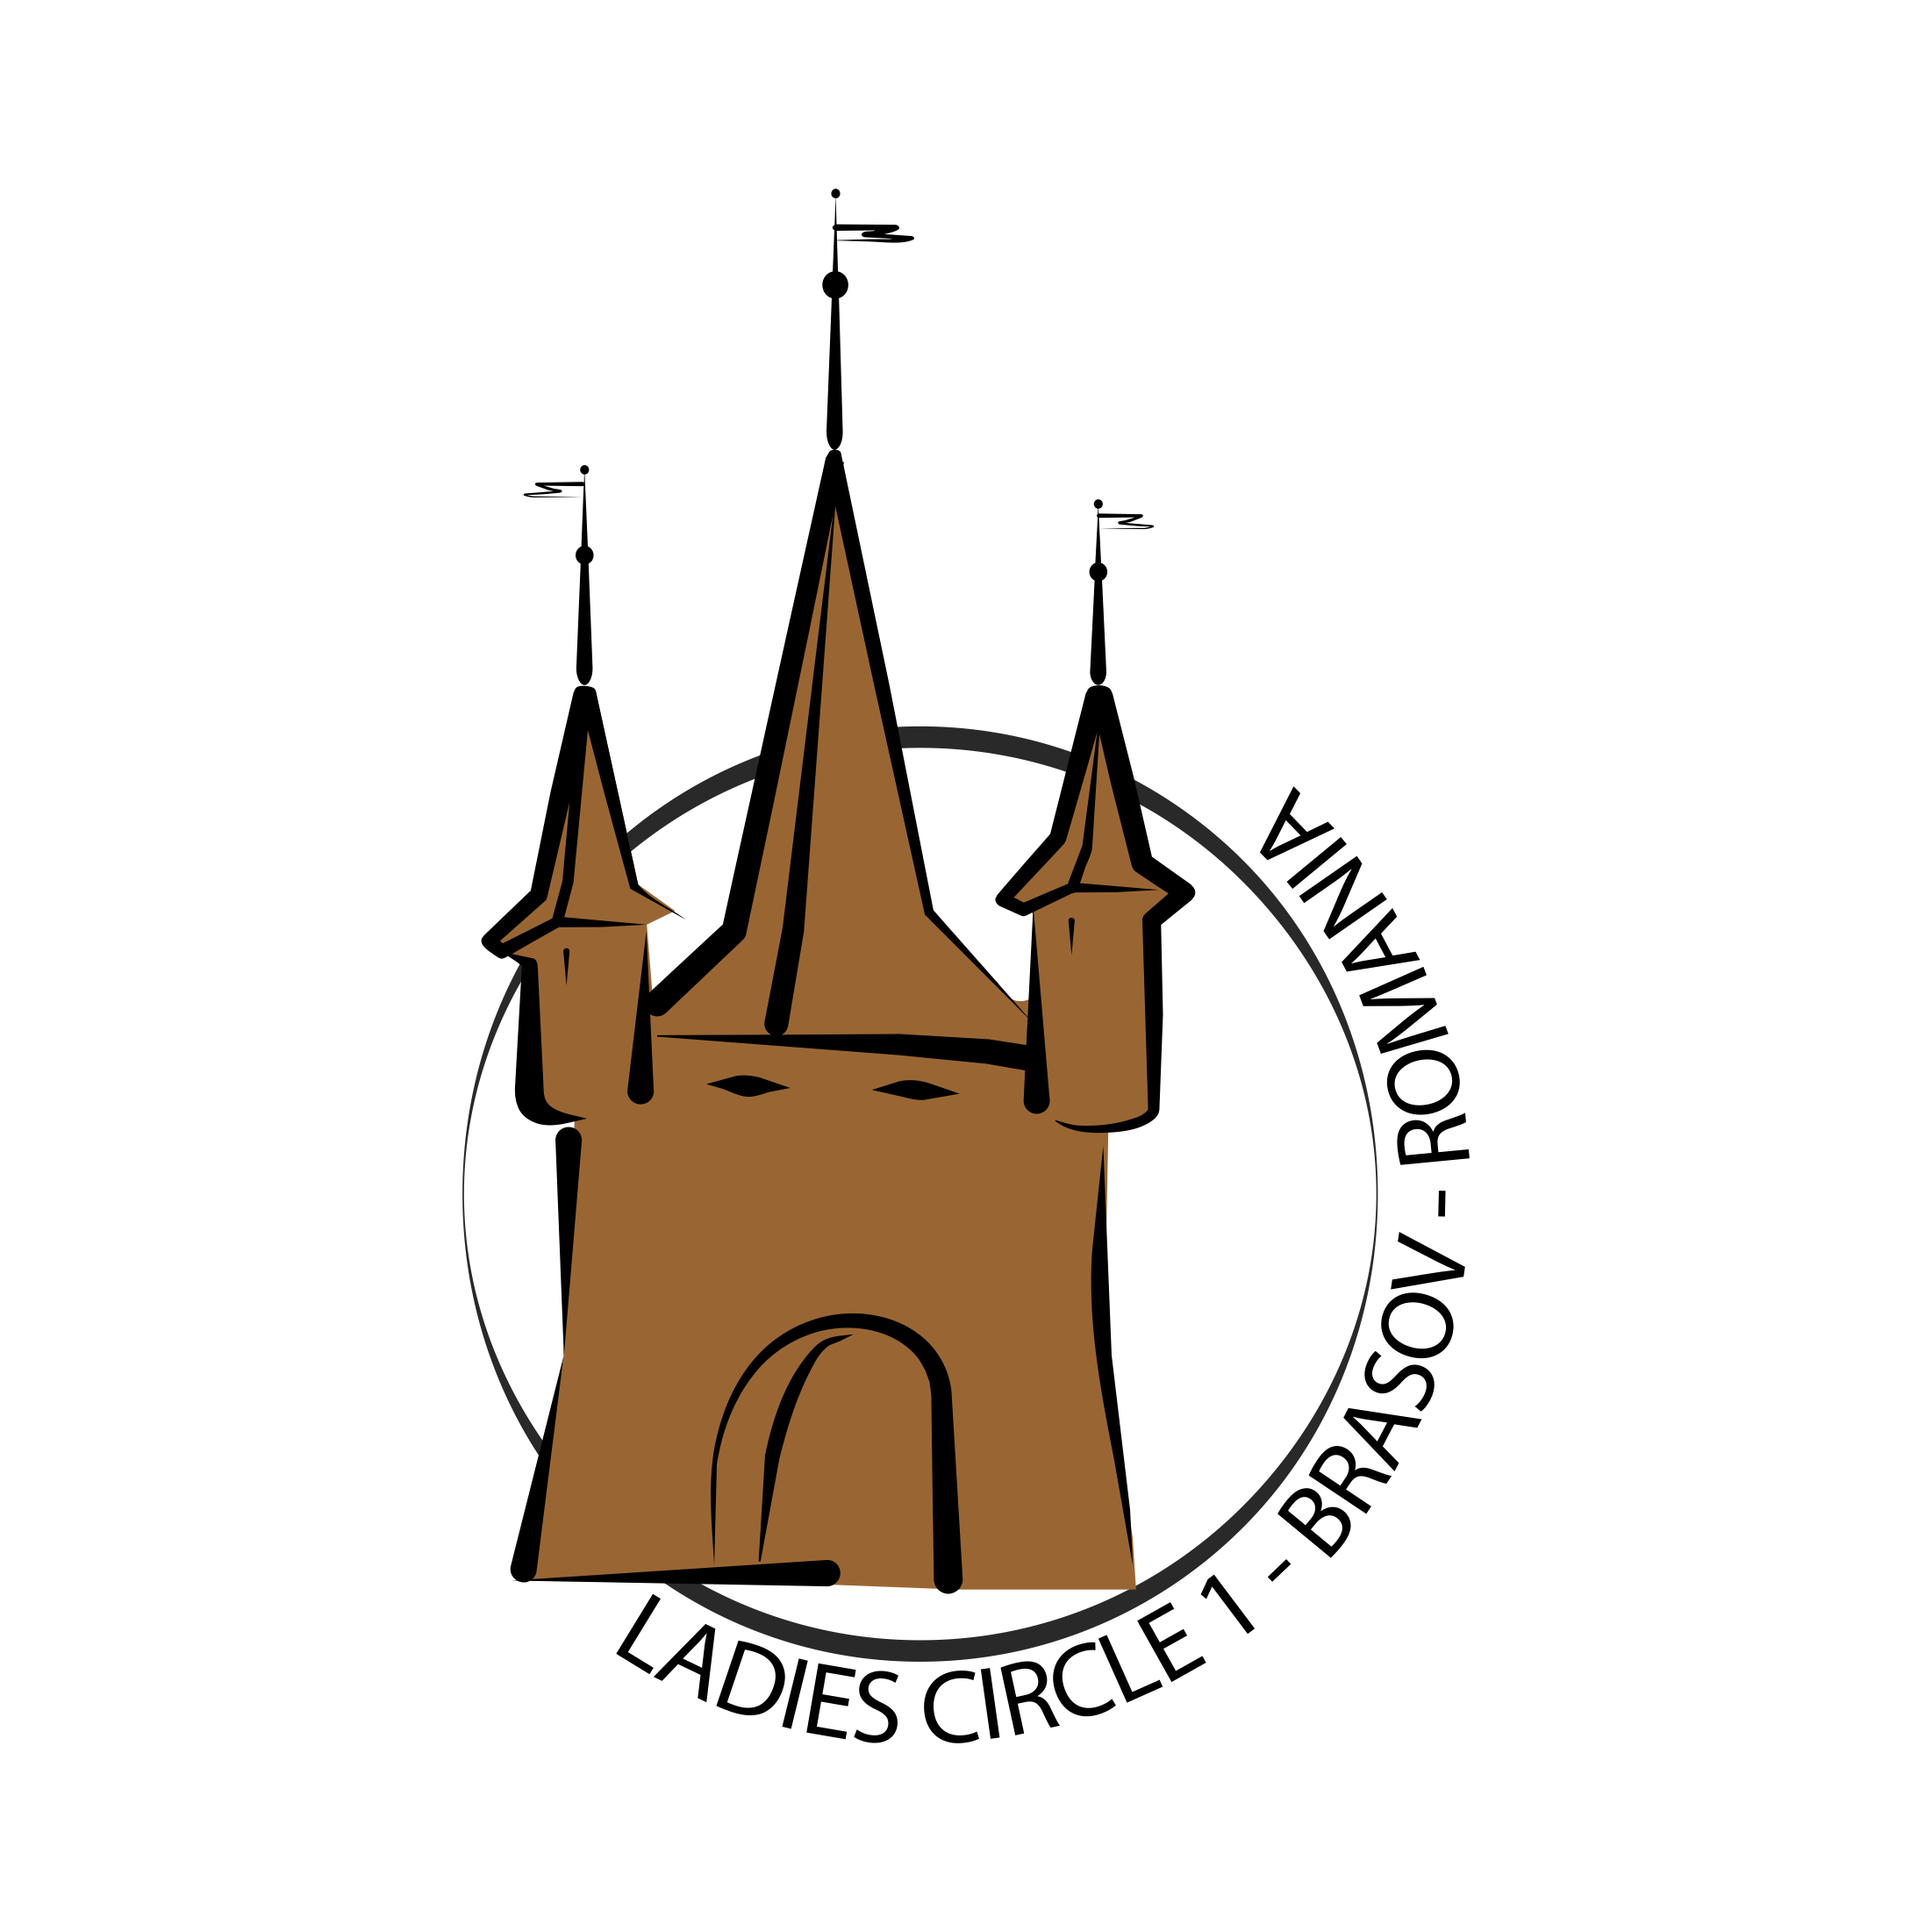 Asociatia "Cercul Doamnelor Nr.1" - "Ladies' Circle" logo